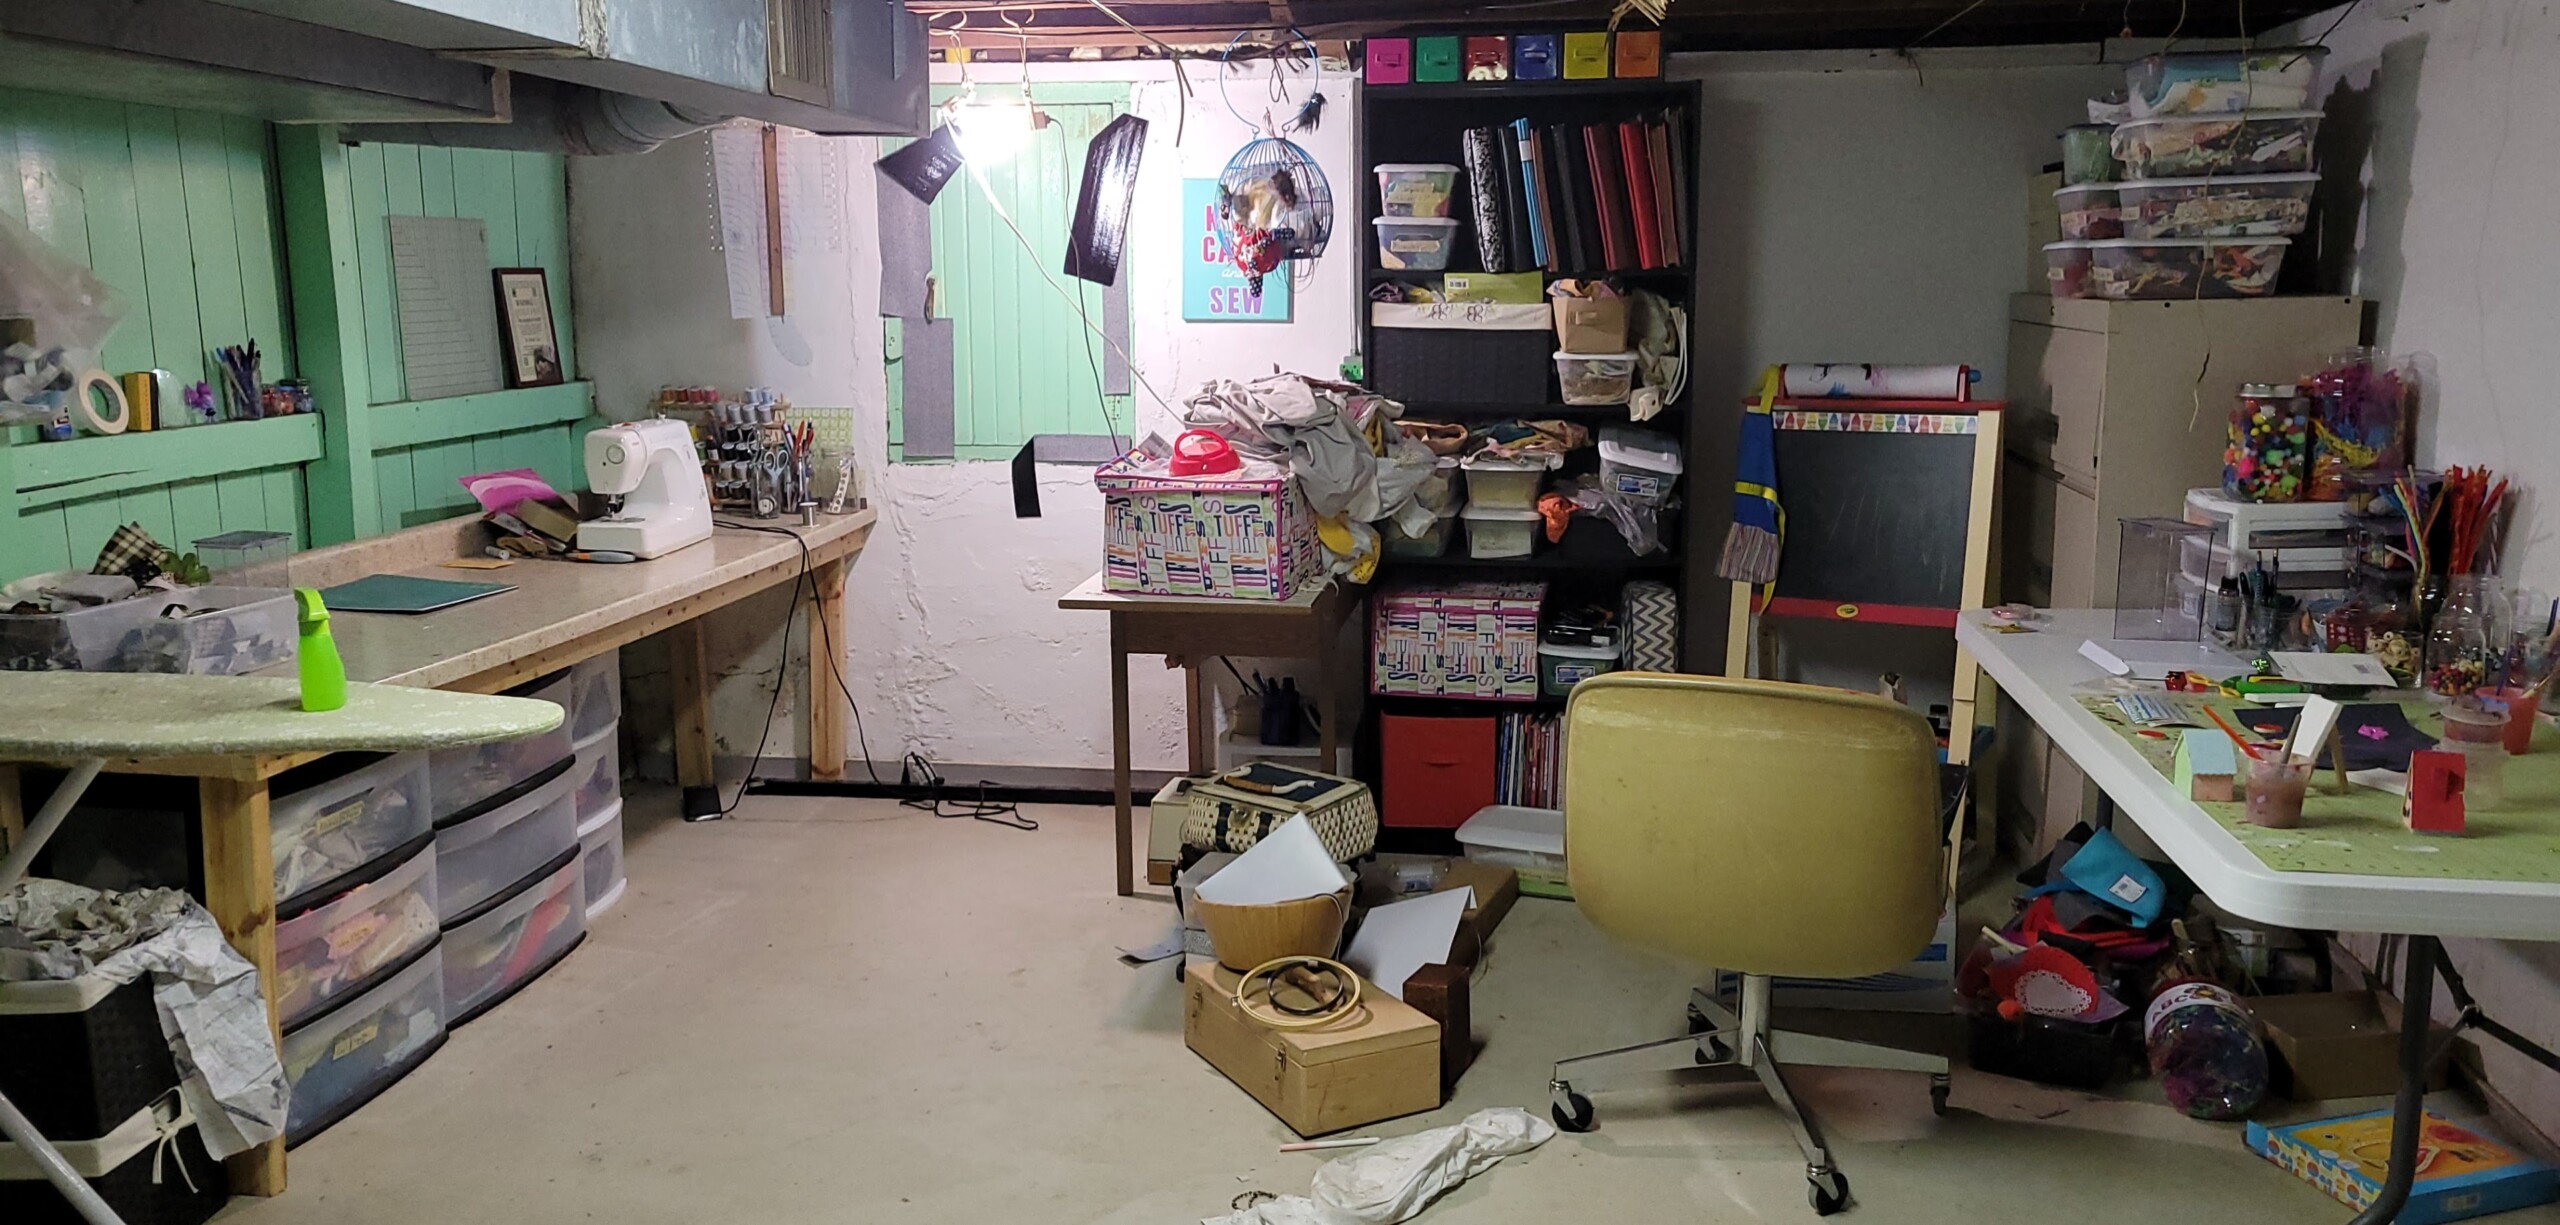 basement-sewing-art-area